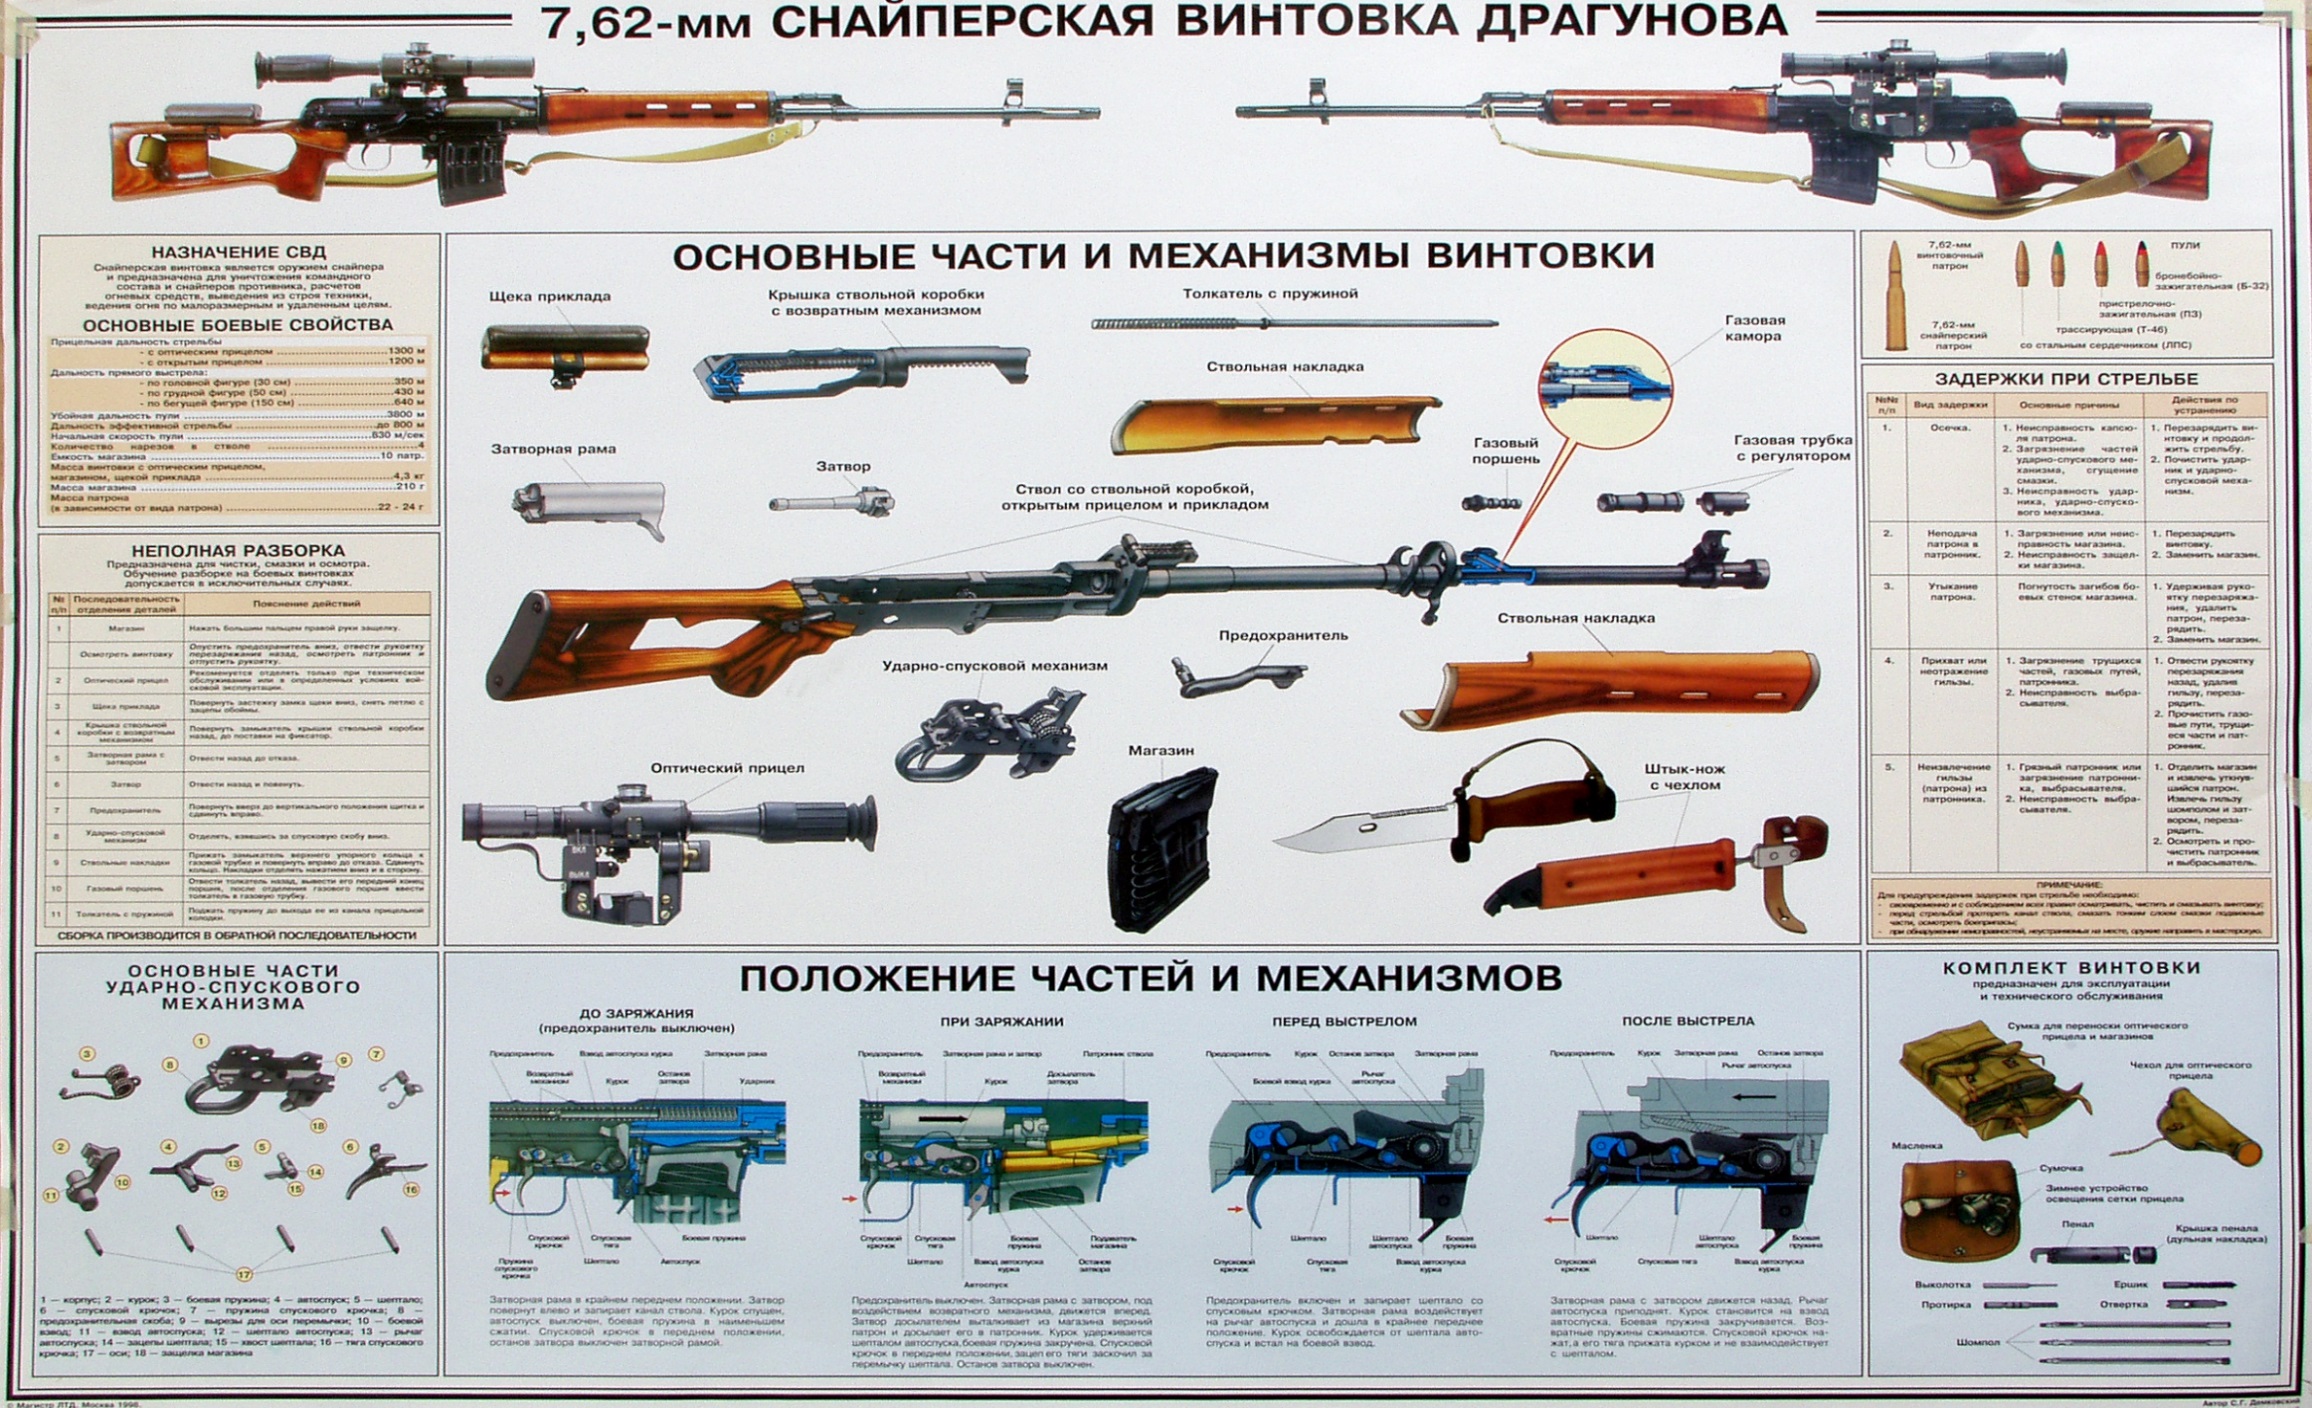 Снайперская винтовка драгунова ттх. ТТХ СВД 7.62 плакат. Комплект для СВД 7.62. Плакат СВД снайперская винтовка. Снайперская винтовка Драгунова характеристики.